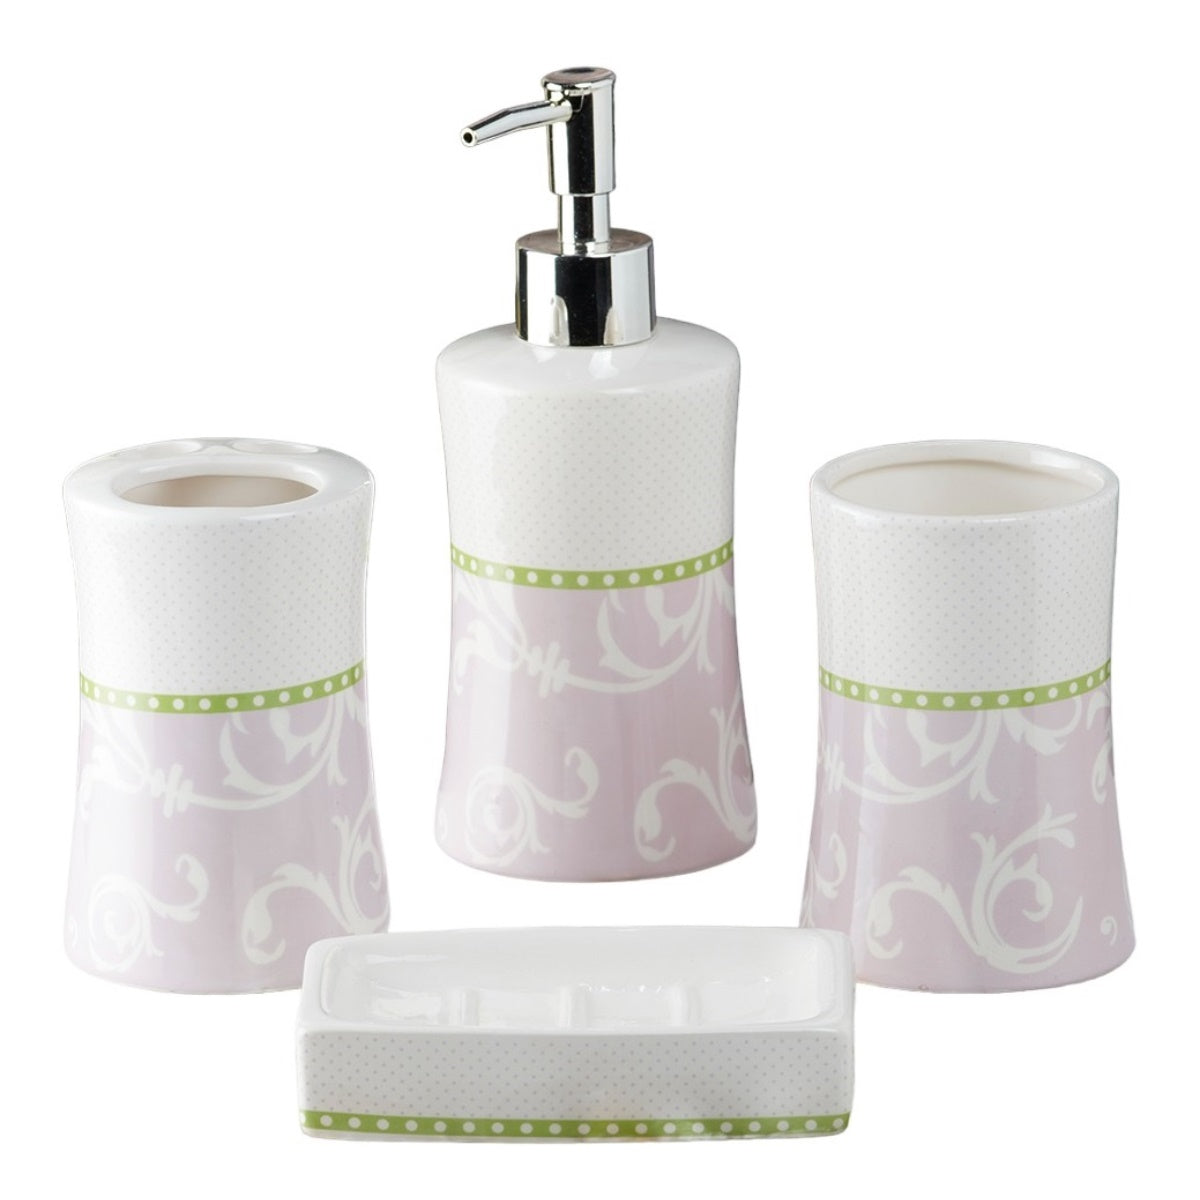 Ceramic Bathroom Accessories Set of 4 Bath Set with Soap Dispenser (8175)